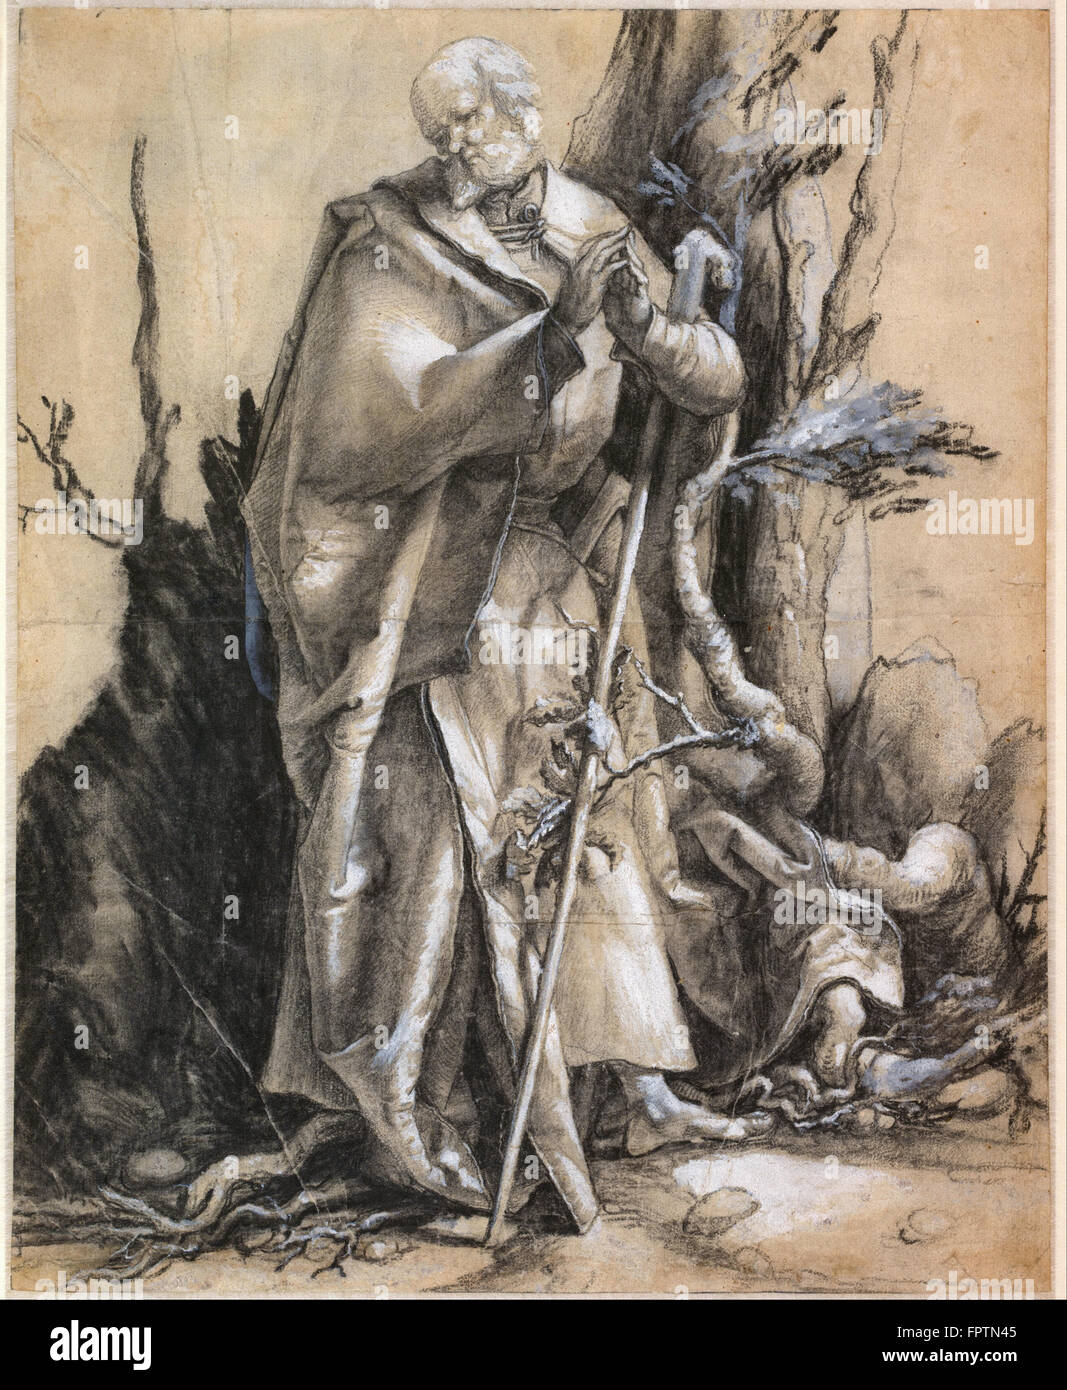 Albrecht Durer - Saint barbudo en un bosque - c. 1516 Foto de stock